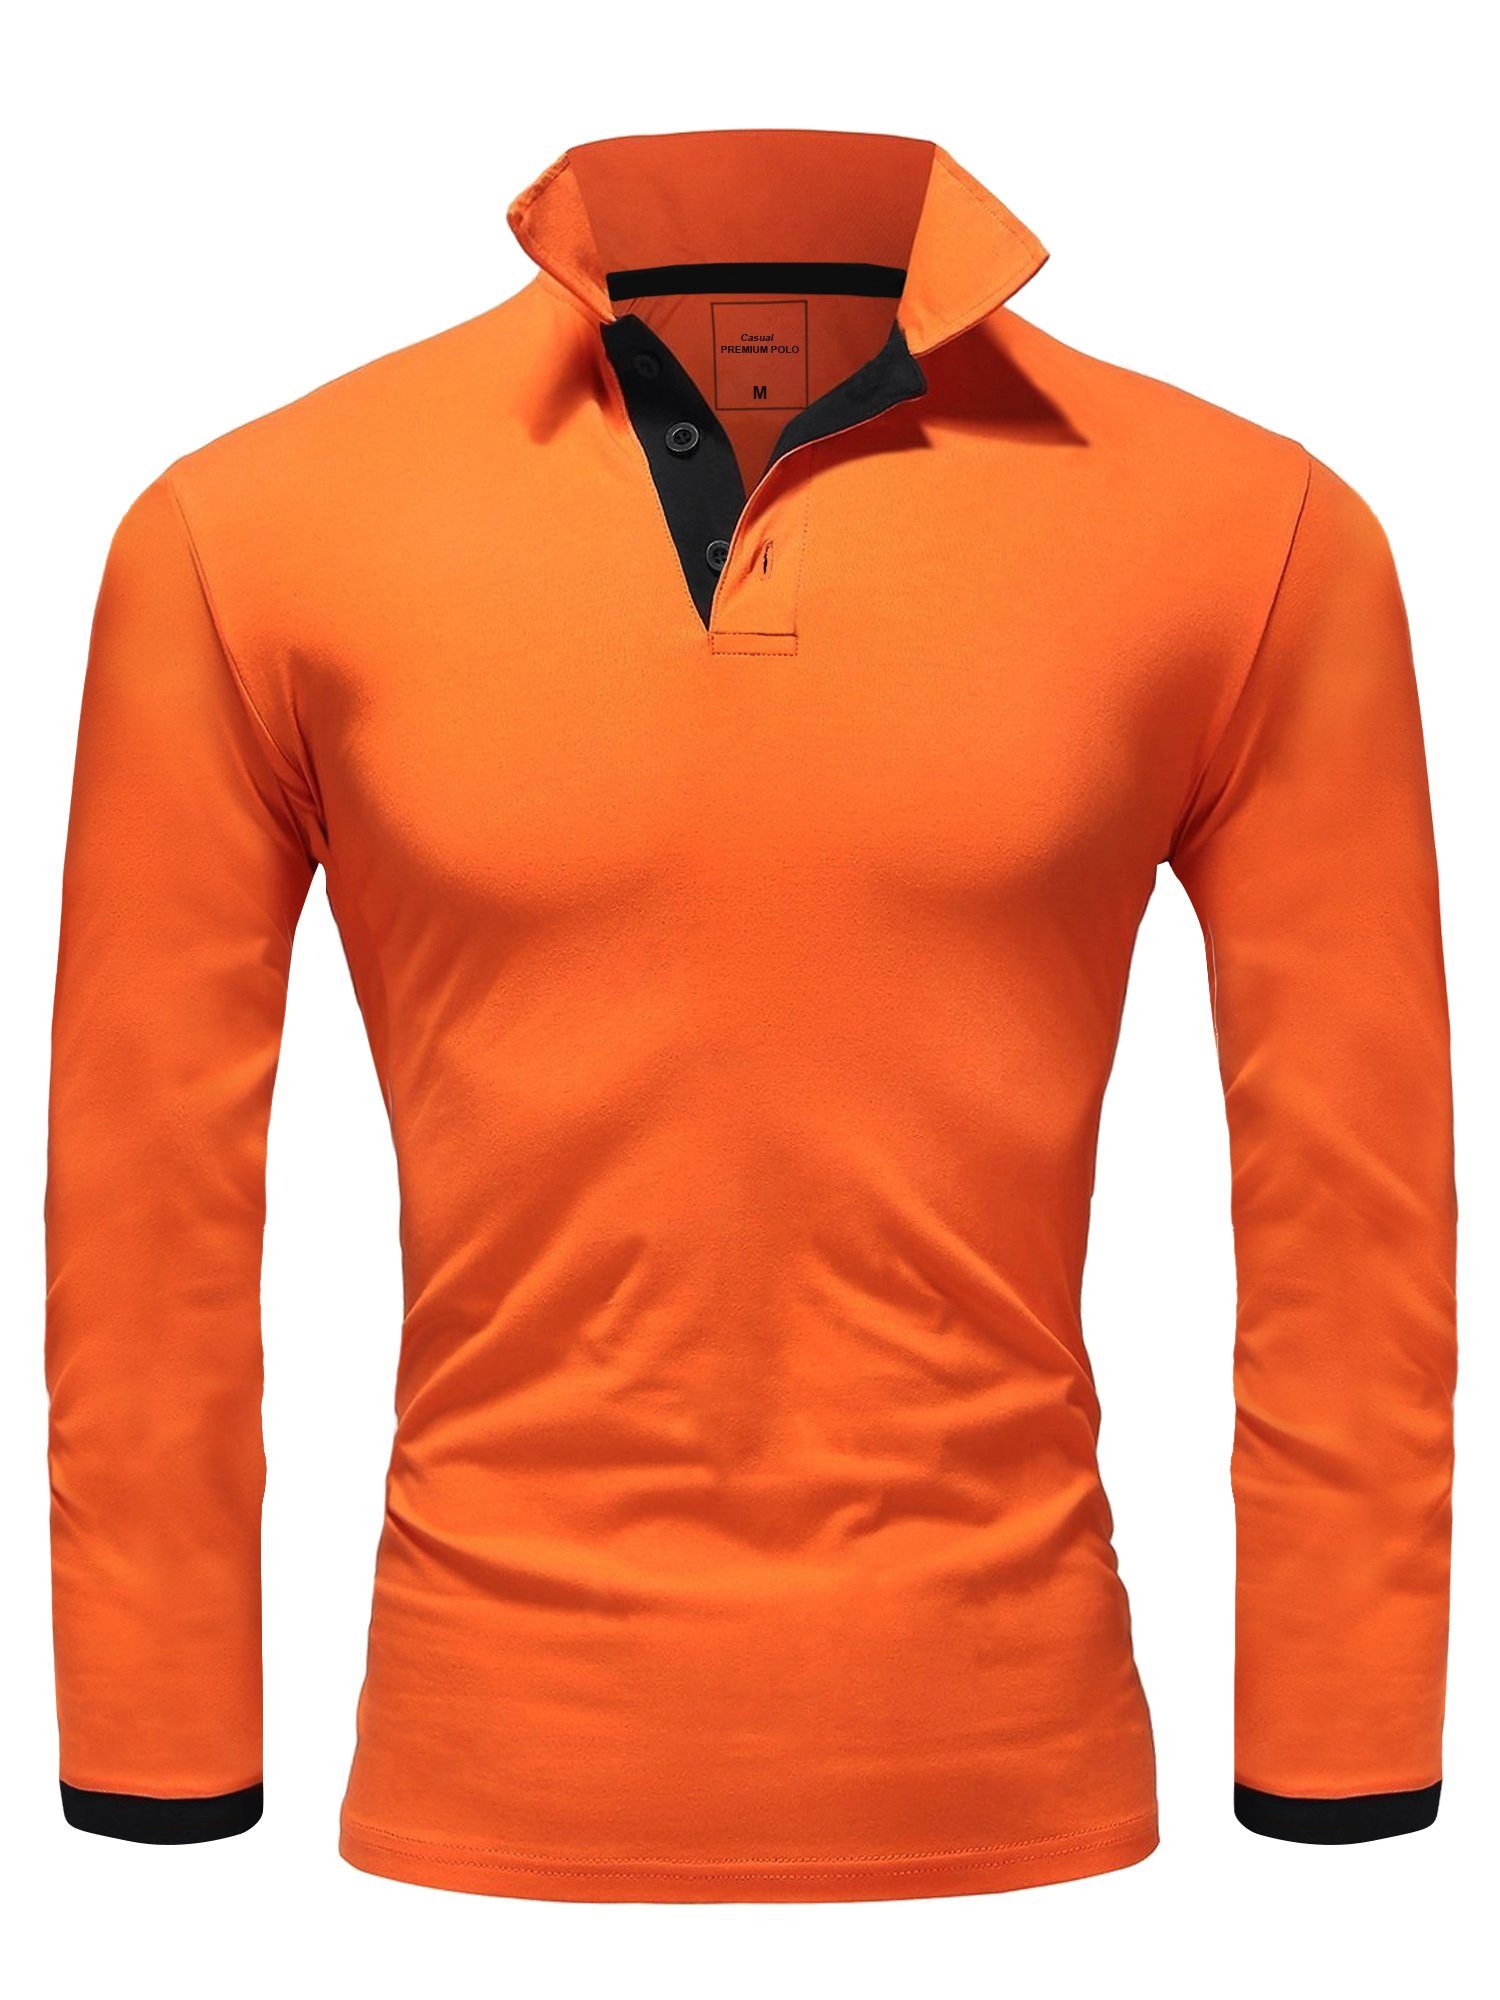 Amaci&Sons Poloshirt CHARLOTTE Langarm Kontrast Poloshirt Orange/Schwarz